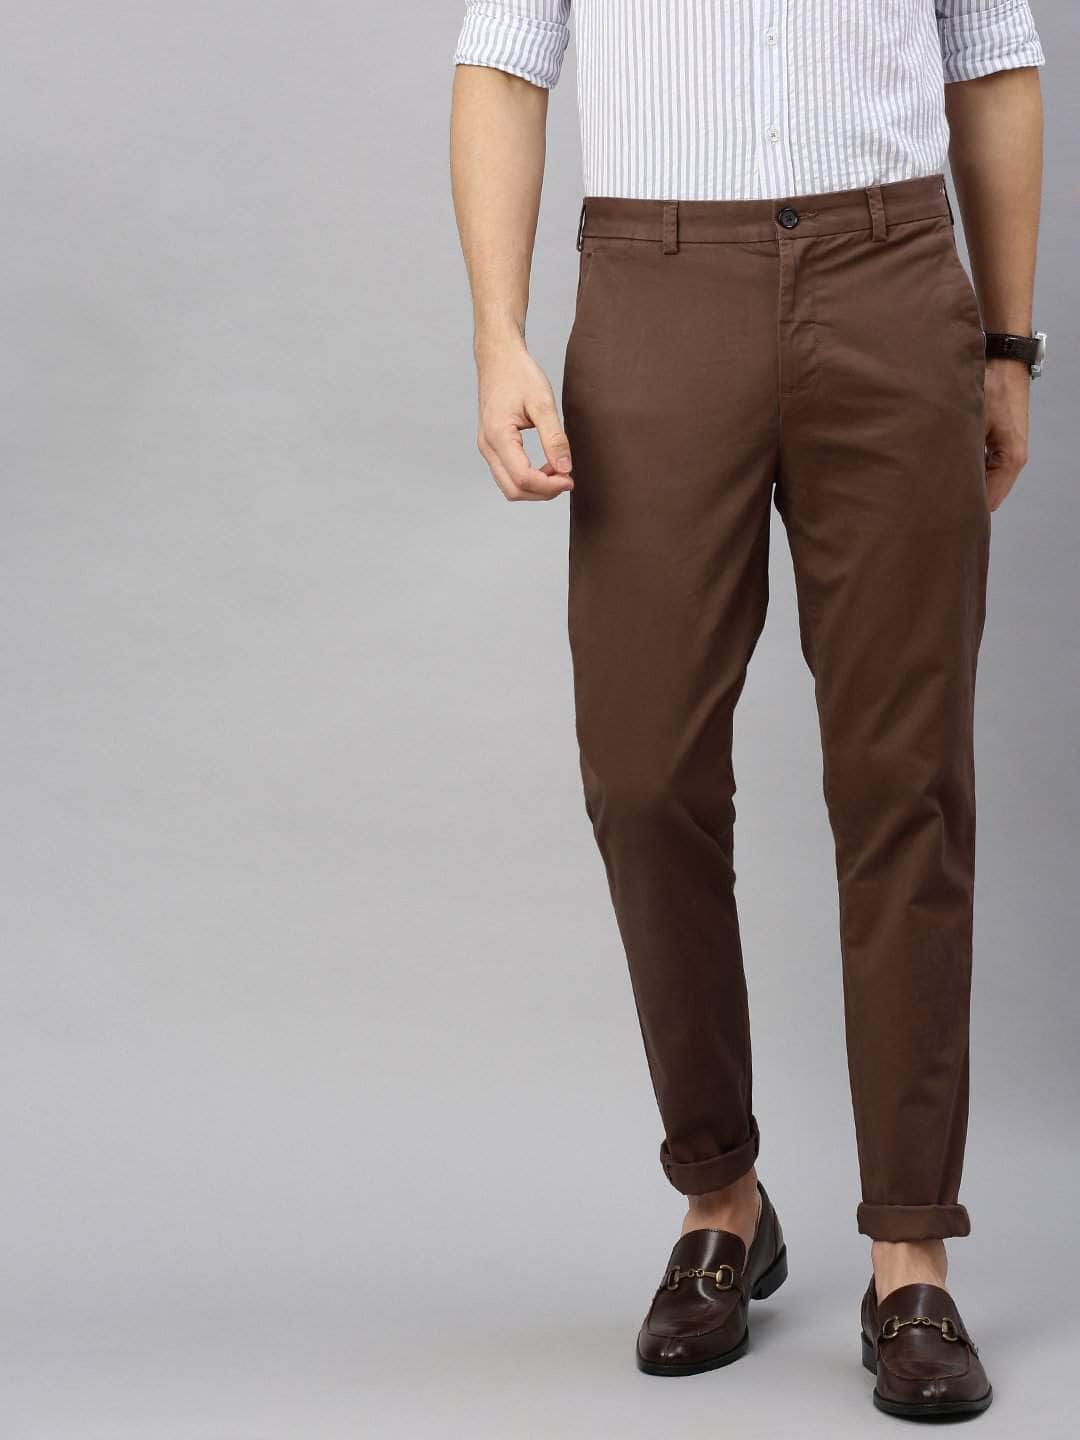 Buy Brown Trousers & Pants for Men by PINE REPUBLIC Online | Ajio.com